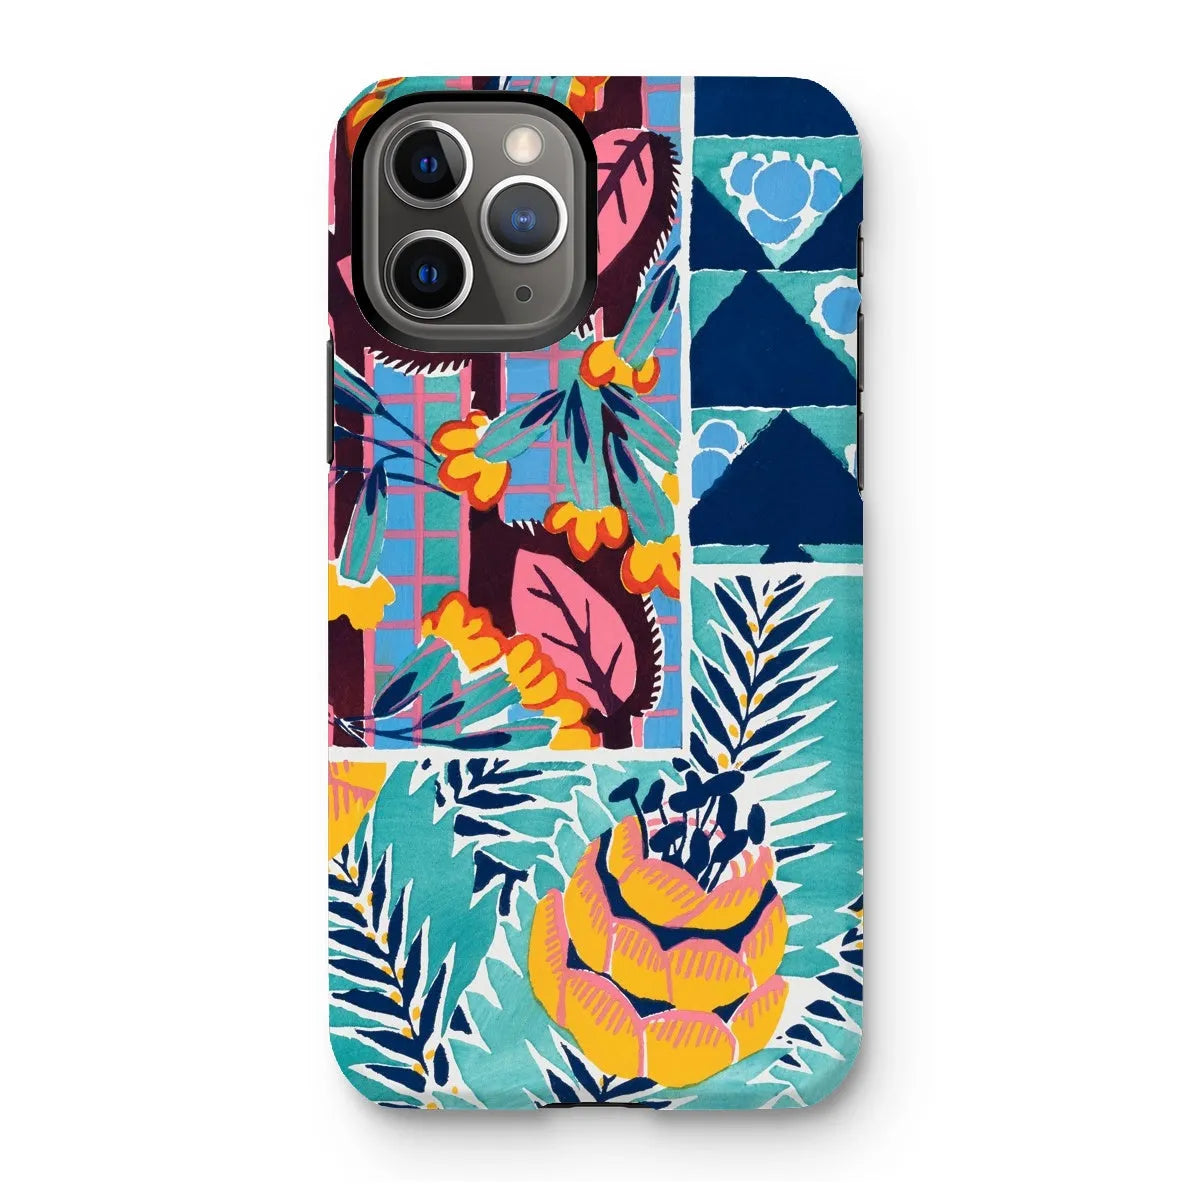 Fabric & Rugs - Pochoir Patterns Phone Case - E. A. Séguy - Iphone 11 Pro / Matte - Mobile Phone Cases - Aesthetic Art